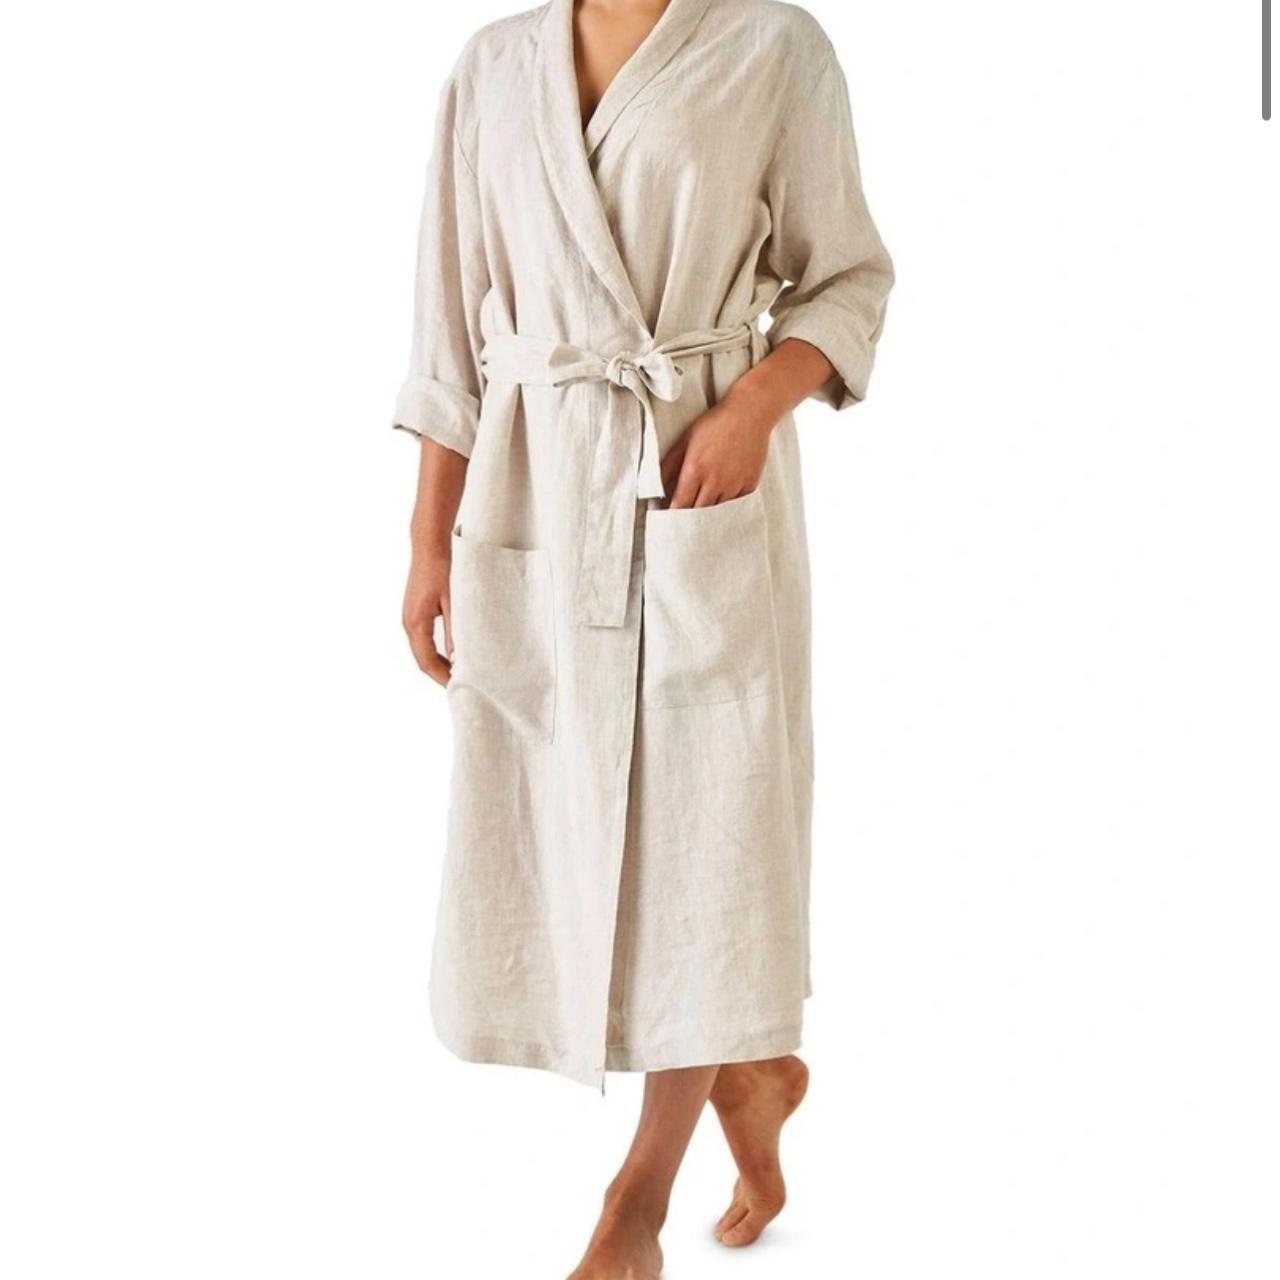 100% Linen house bath robe in the colour... - Depop